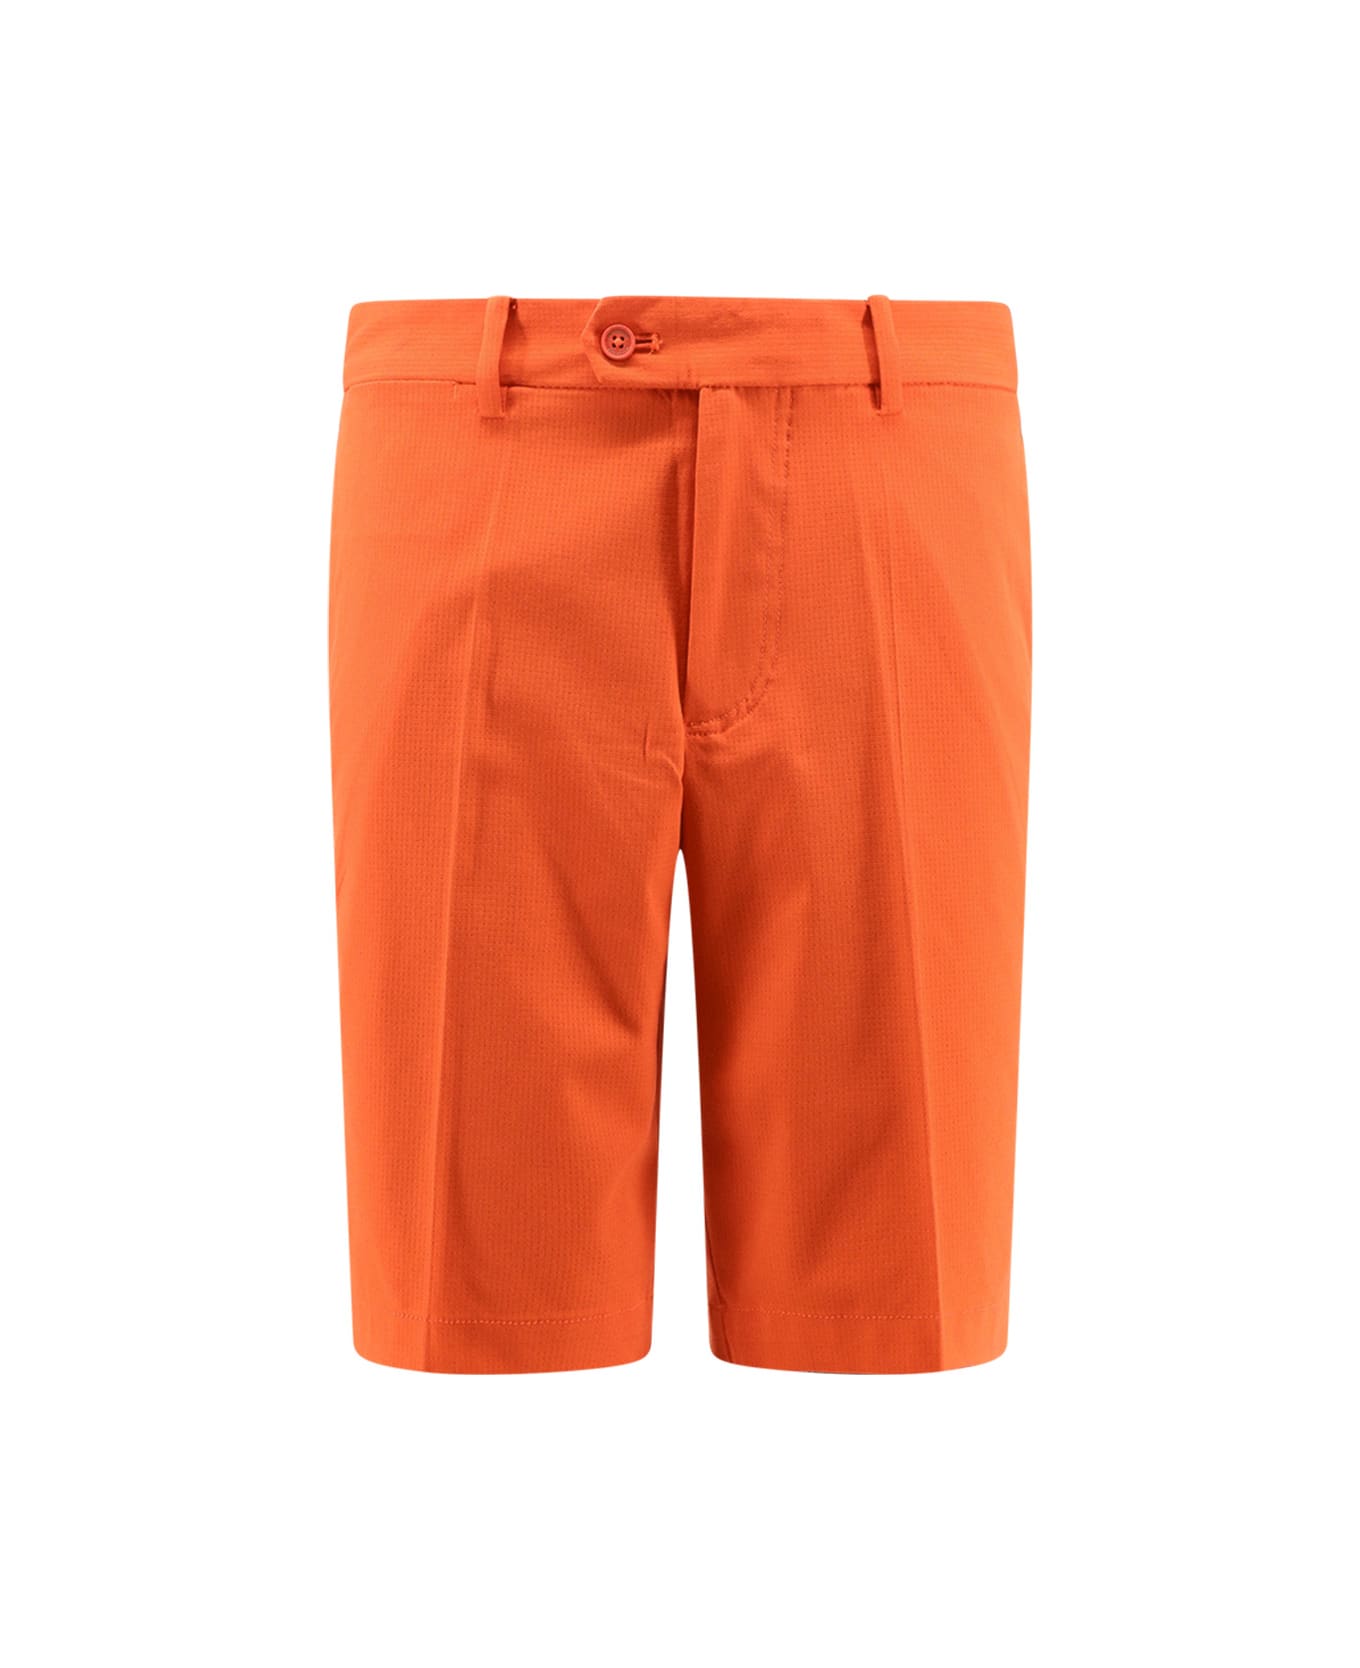 J.Lindeberg Bermuda Shorts - Orange ショートパンツ